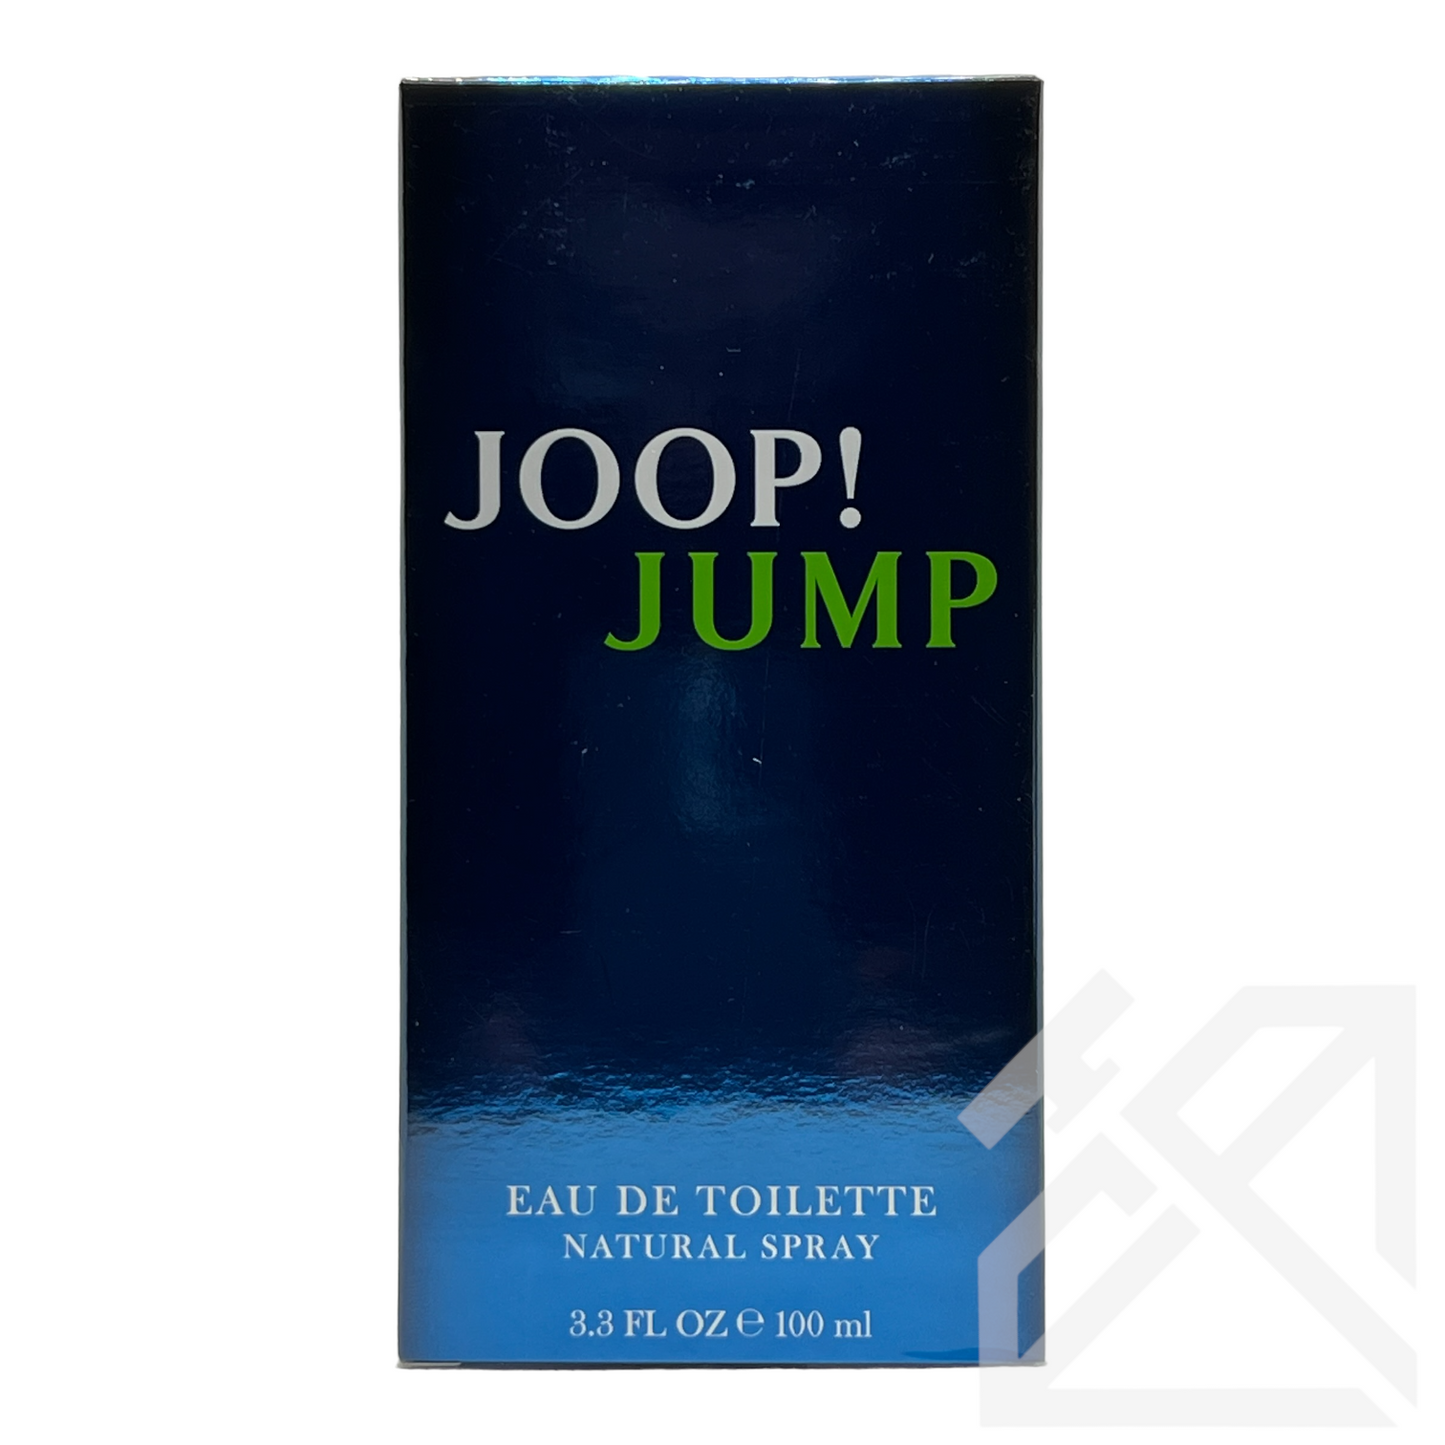 Joop! Jump For Him Eau de toilette 100ml spray